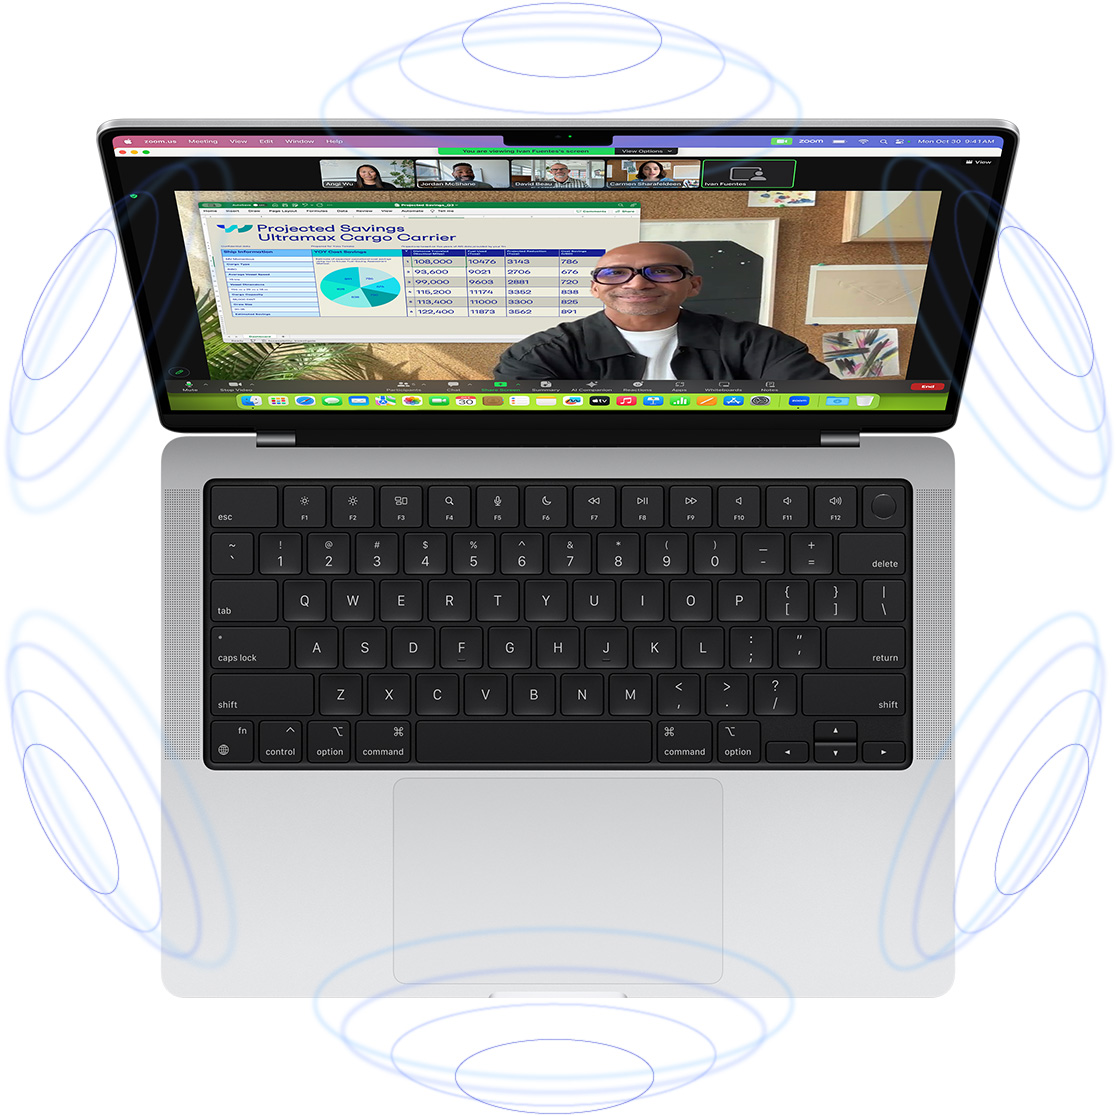 Panggilan video FaceTime di MacBook Pro, yang dikelilingi ilustrasi lingkaran biru untuk menggambarkan suasana 3D Audio Spasial